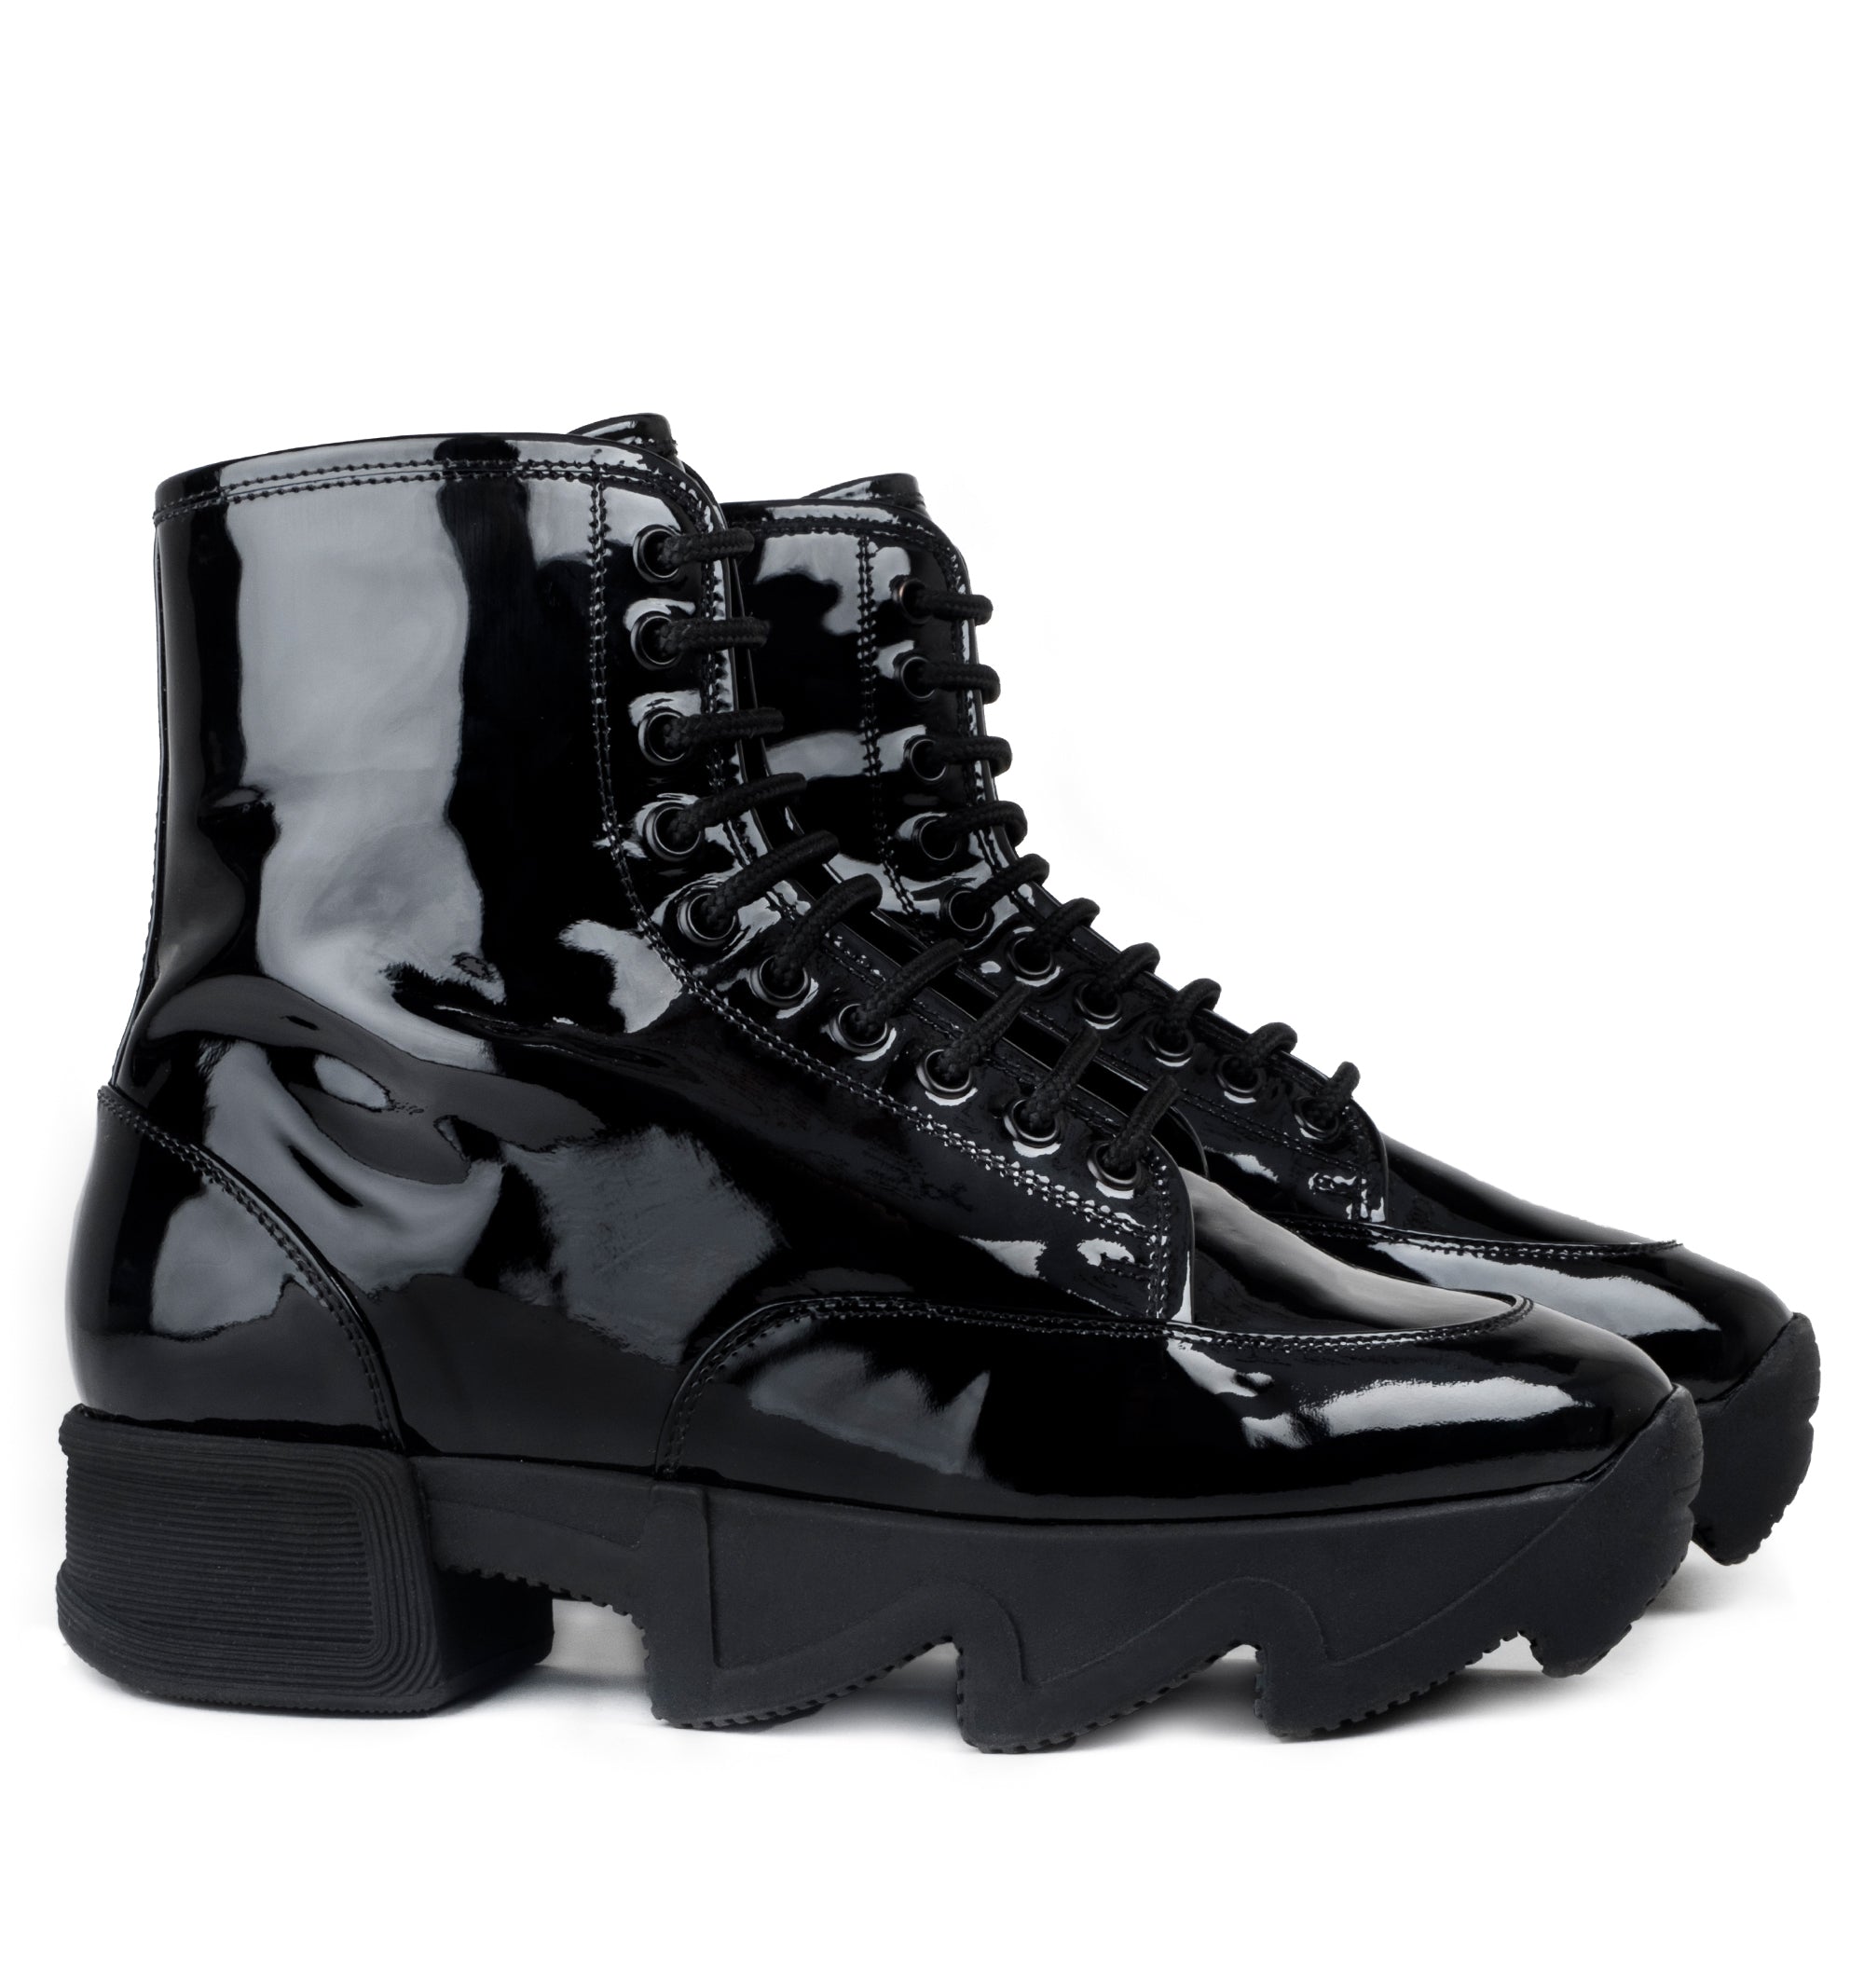 black boots patent